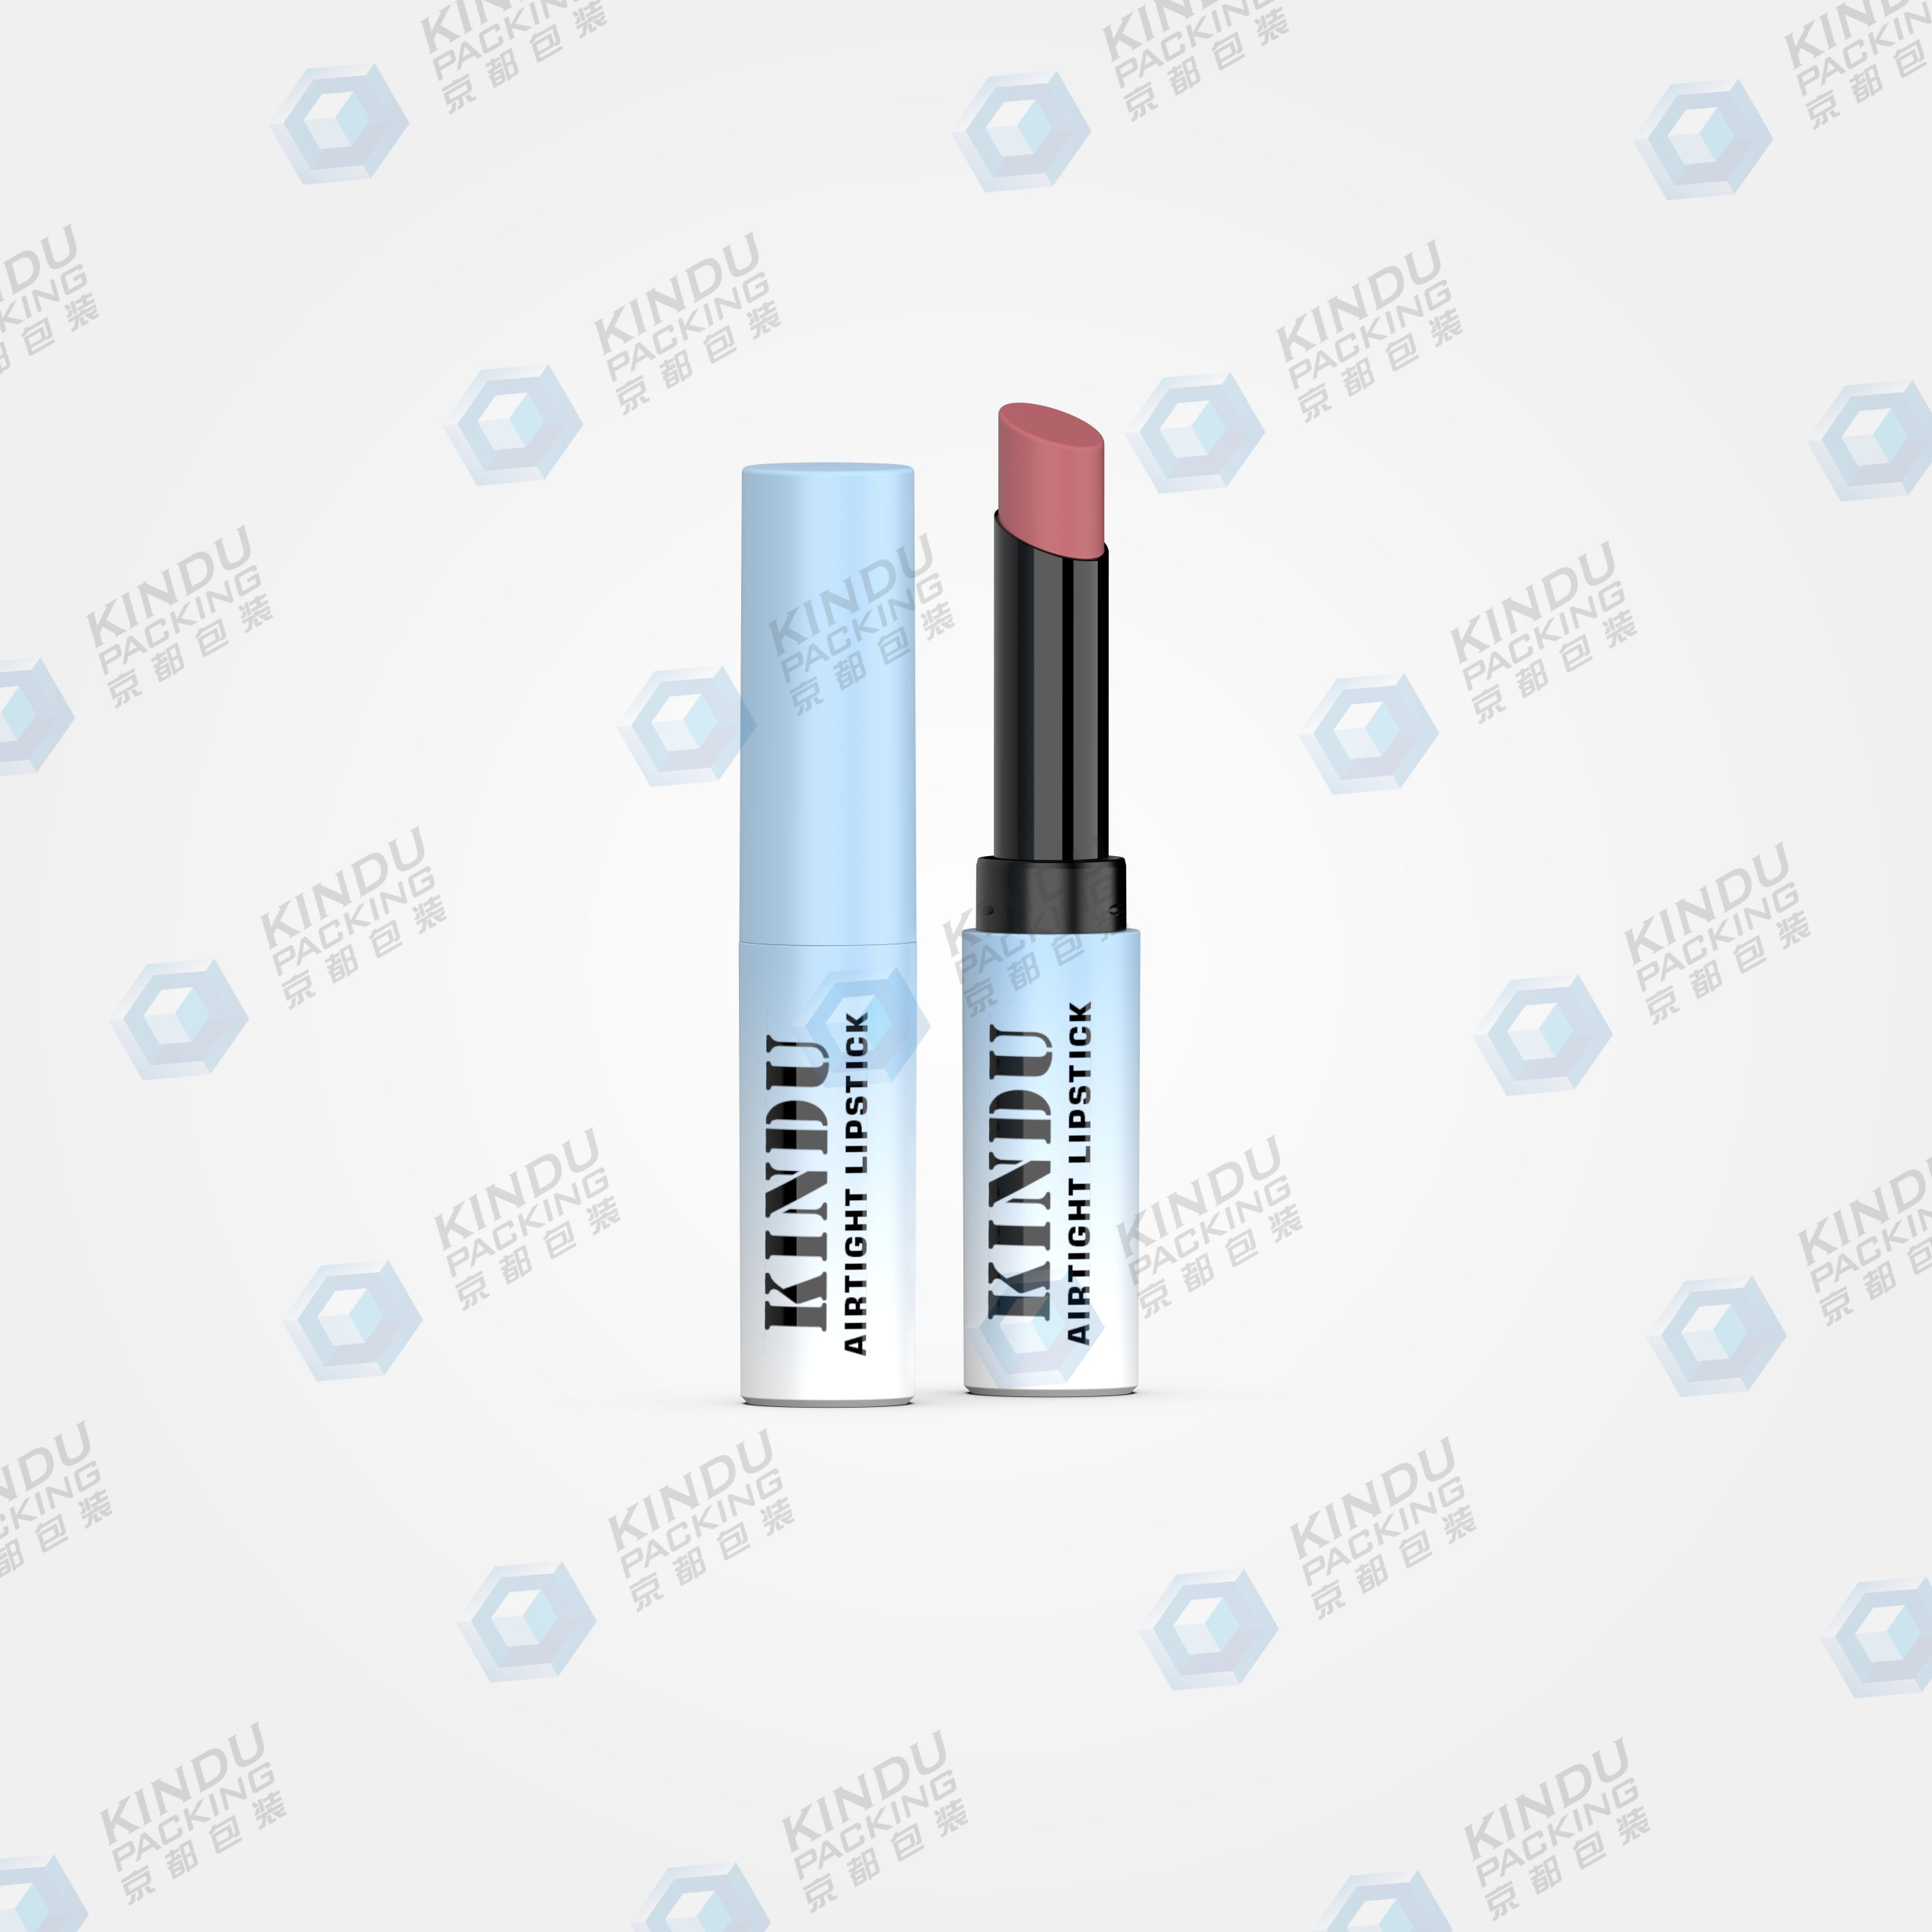 84.30 mm x 16.00 mm Airtight Lipstick Packaging (ZH-K0241)